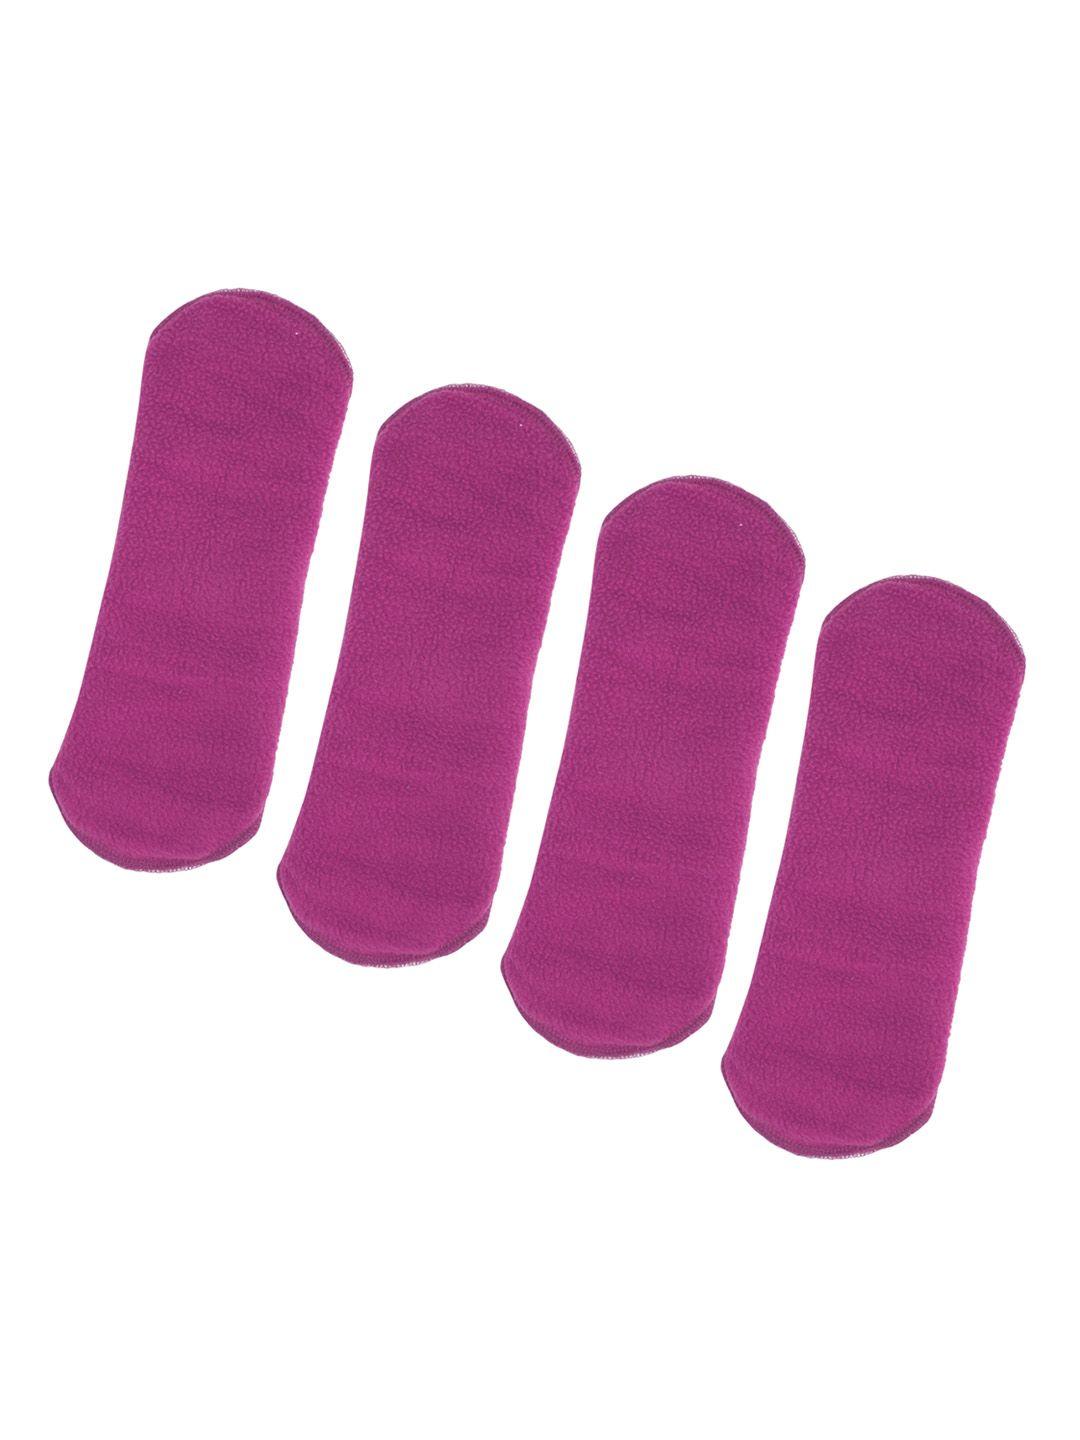 caredone set of 4 ultra thin 4-layered rash free reusable sanitary cloth pads - xl